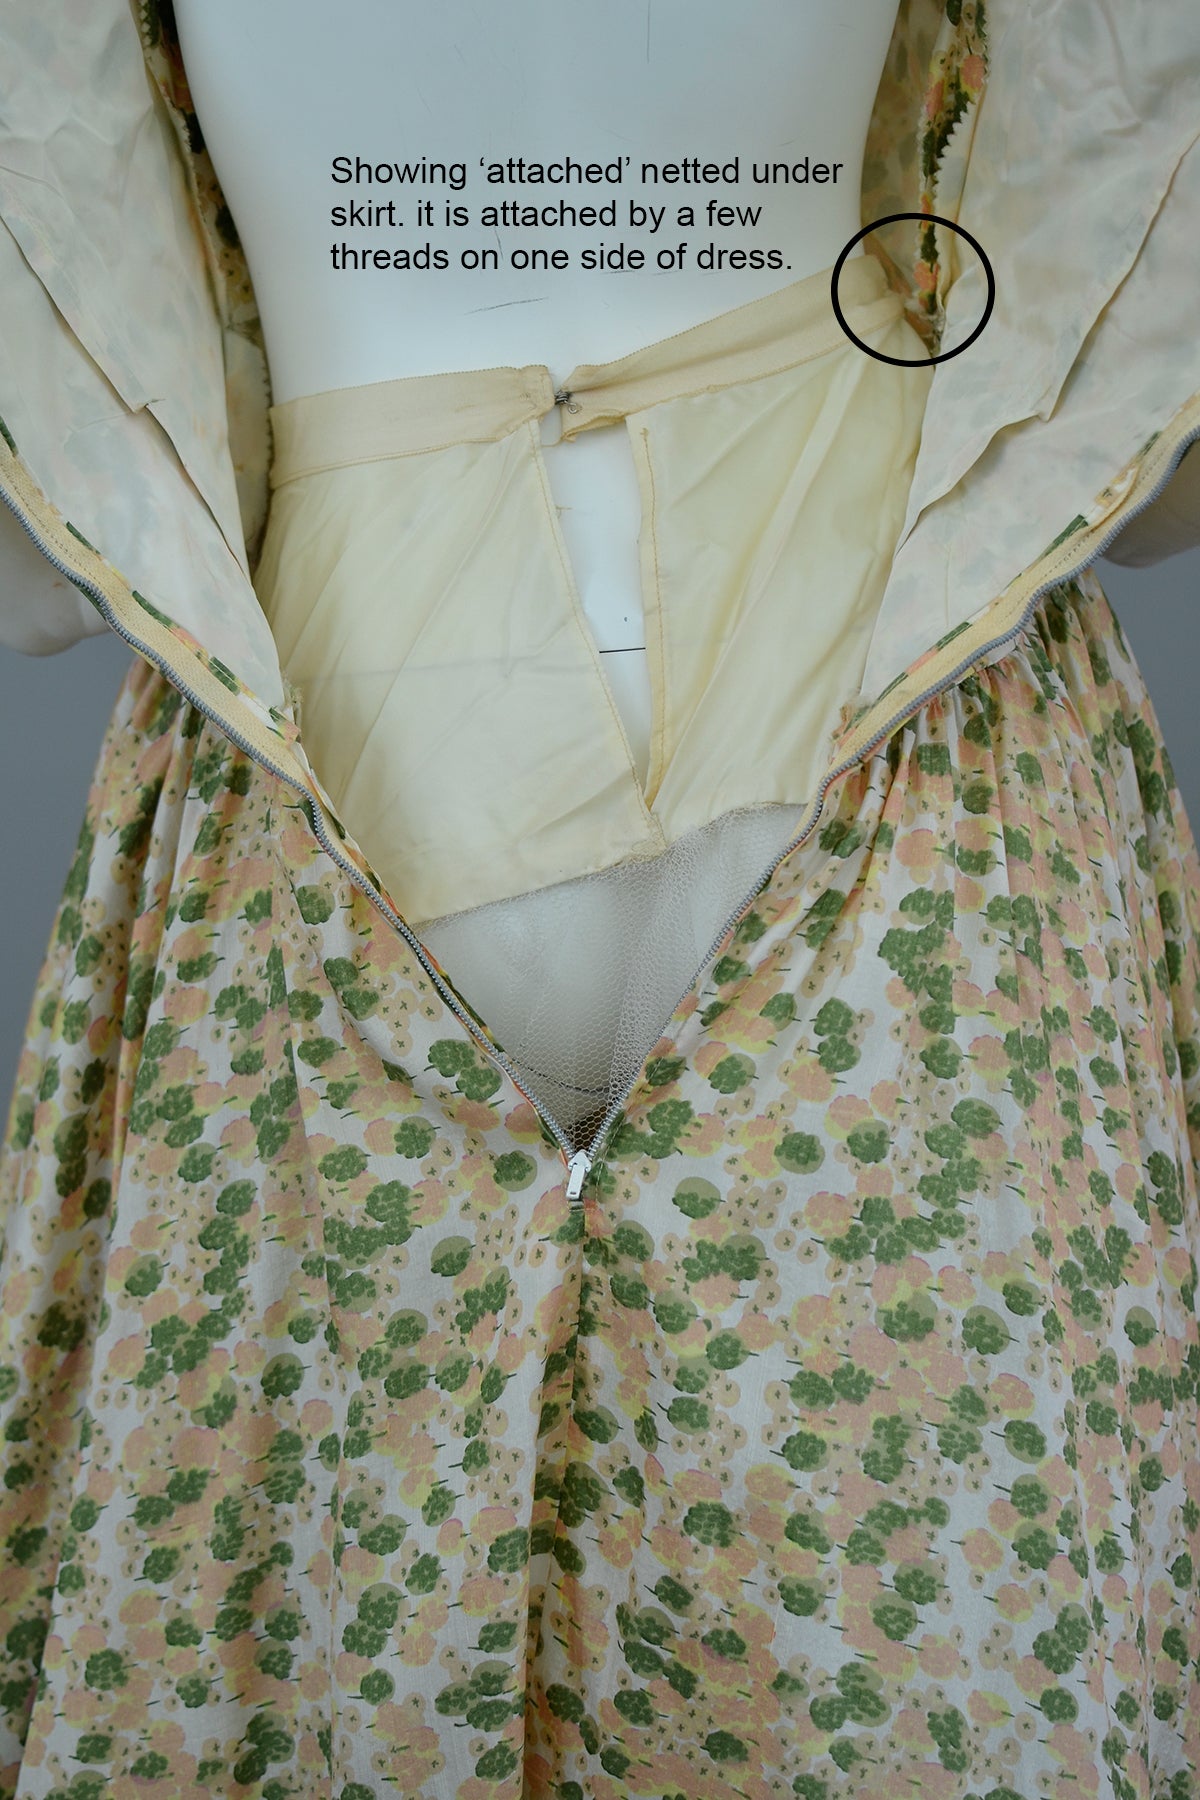 1950s Retro Print Drop Waist Party Dress